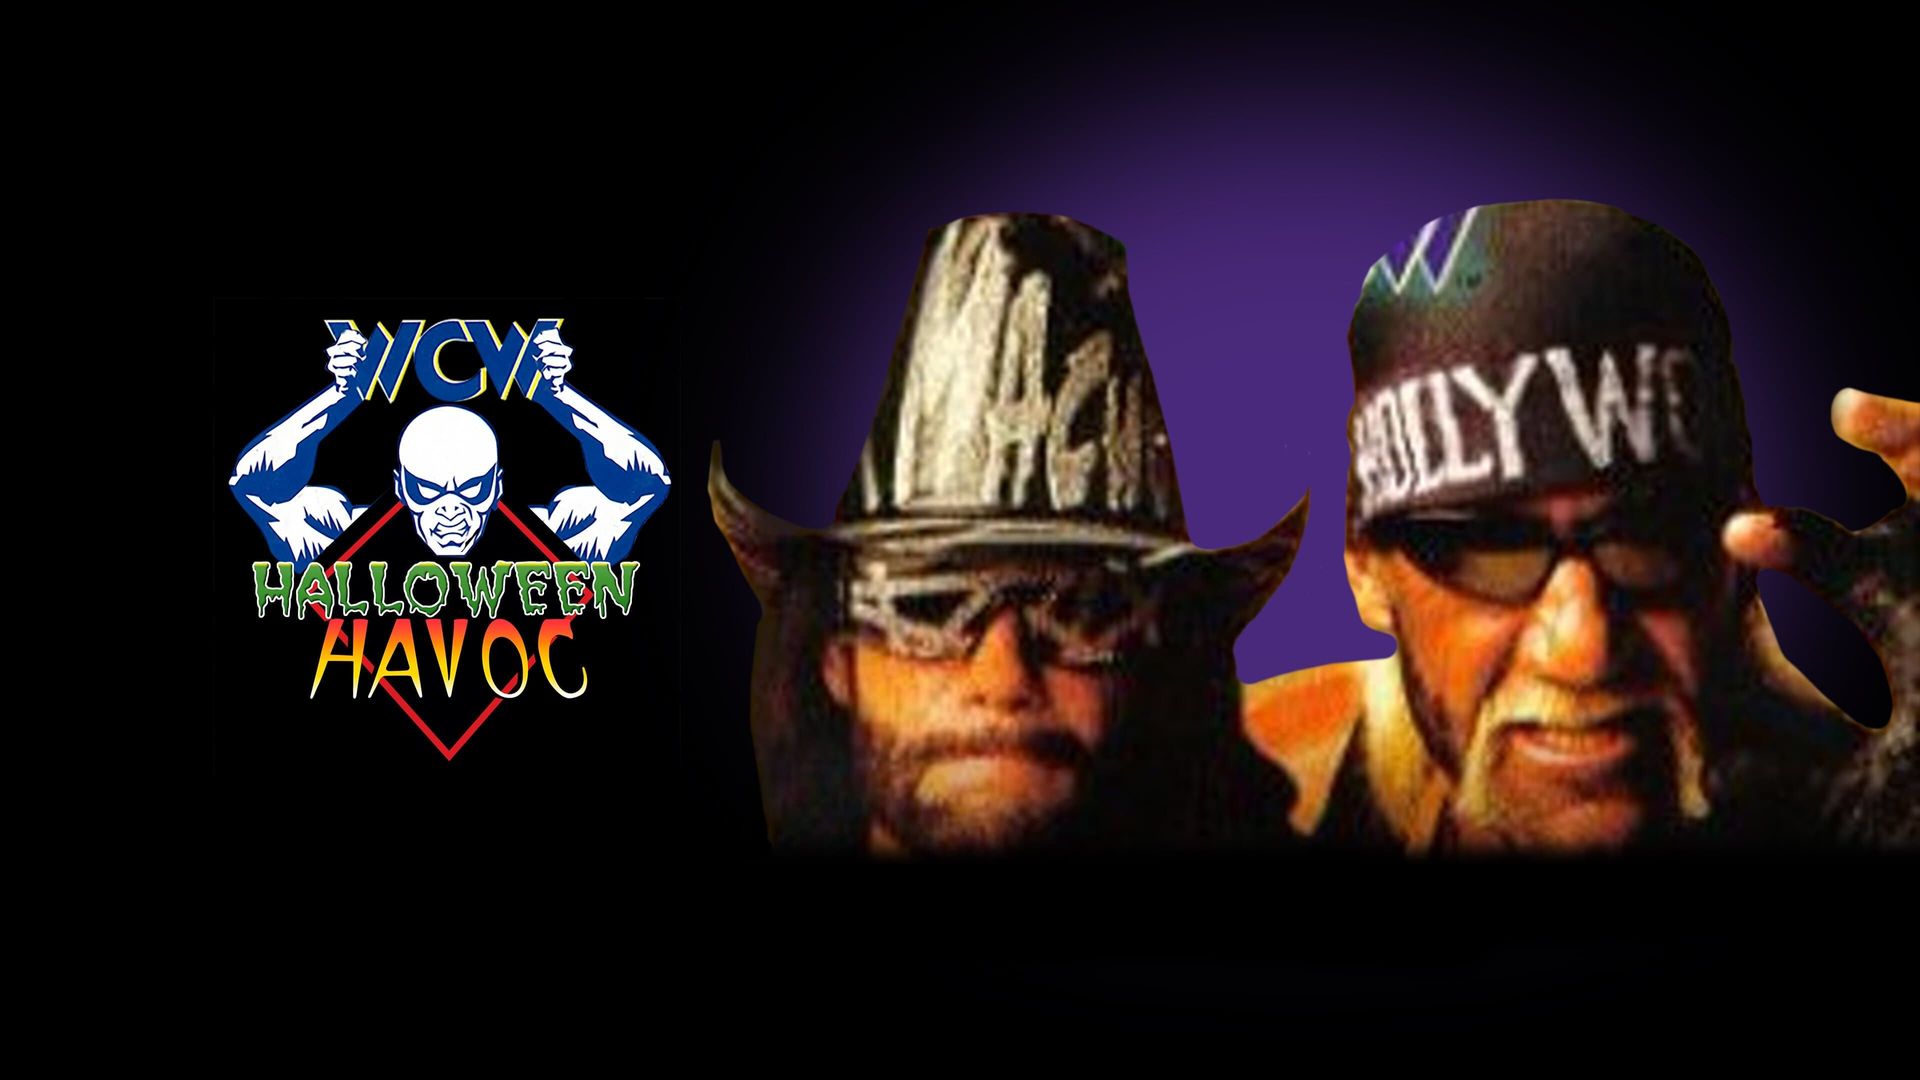 WCW Halloween Havoc background